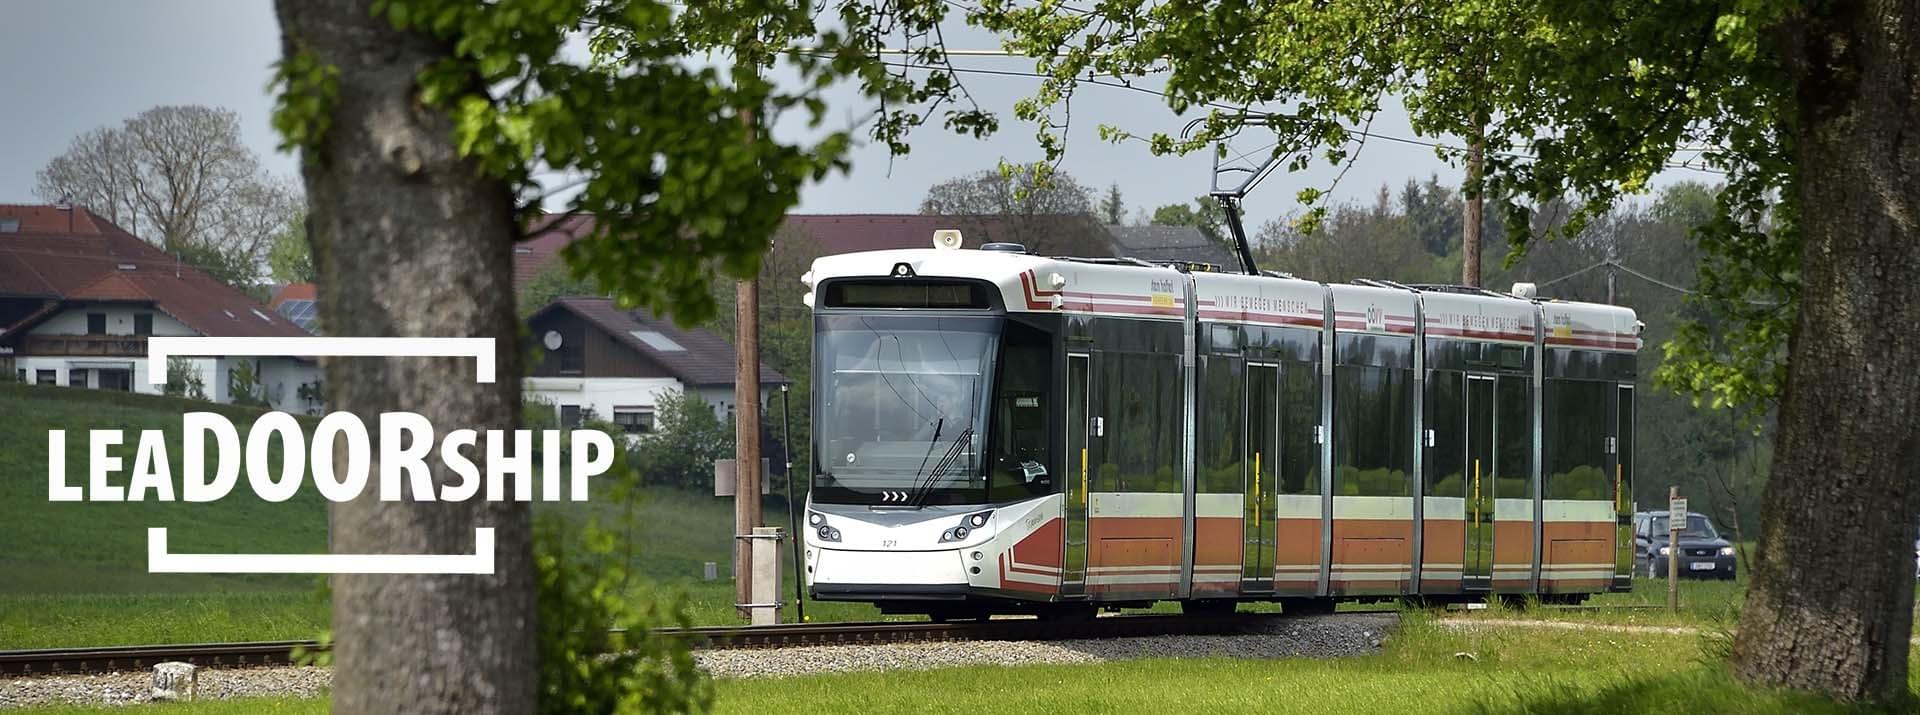 Straßenbahn in grüner urbaner Umgebung